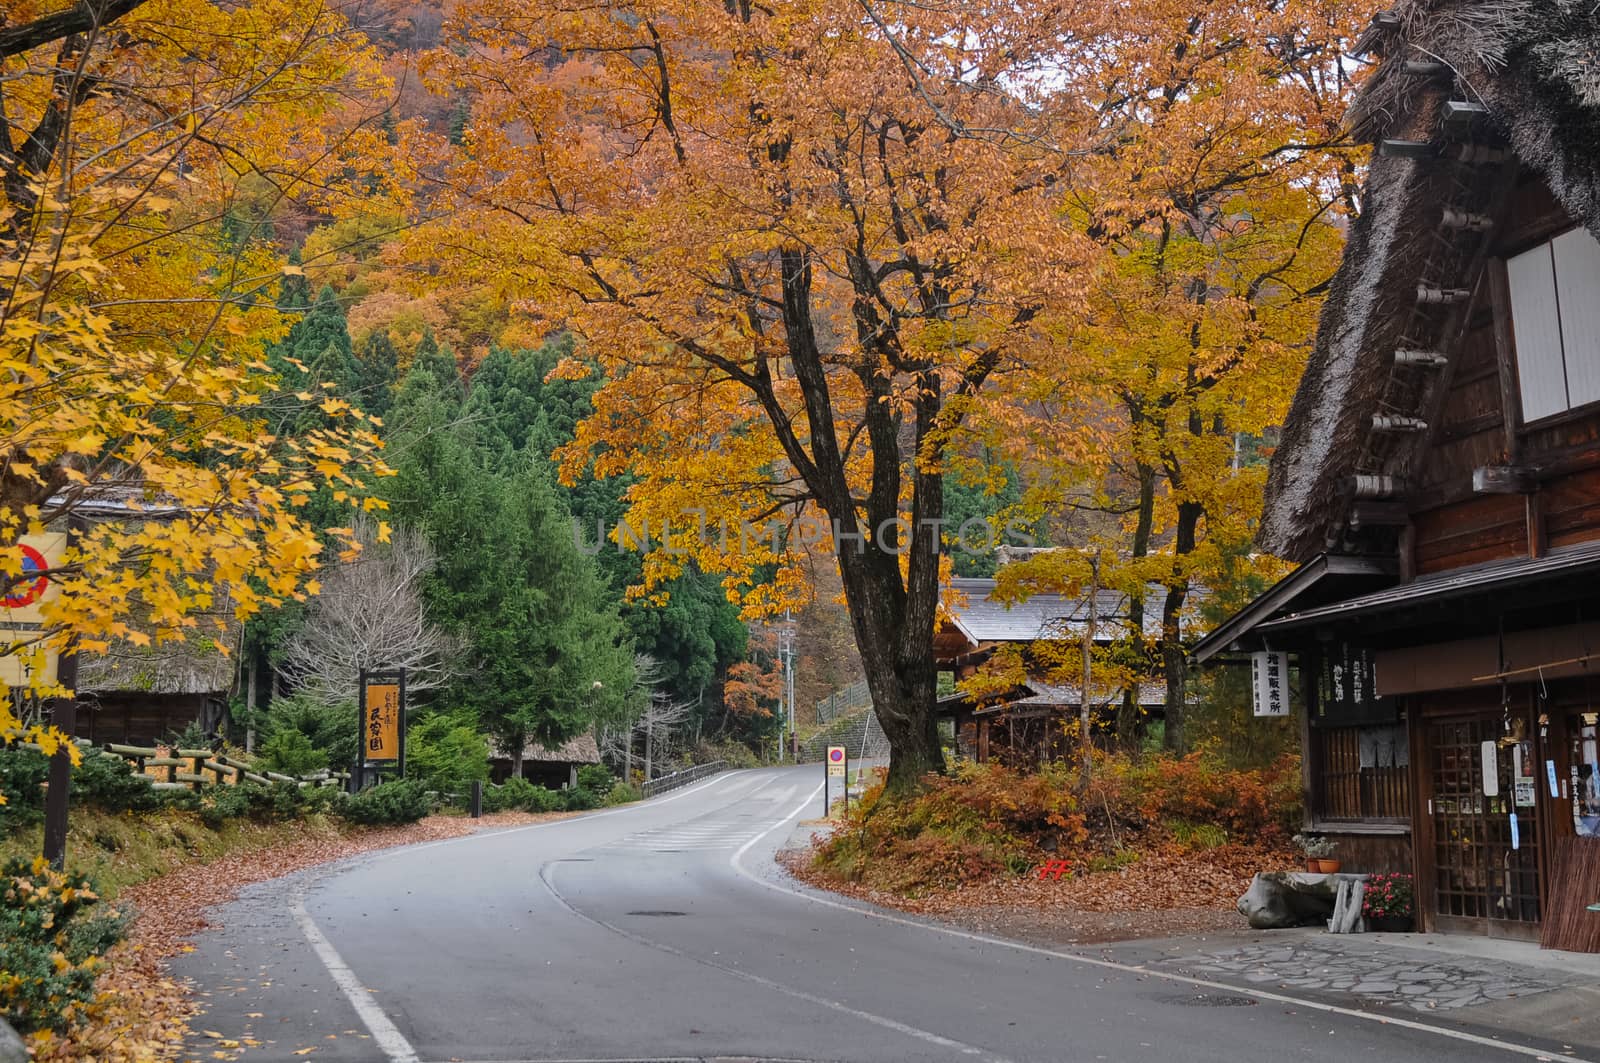 Shirakawago heritage cottage in magical Autumn Takayama Japan by eyeofpaul